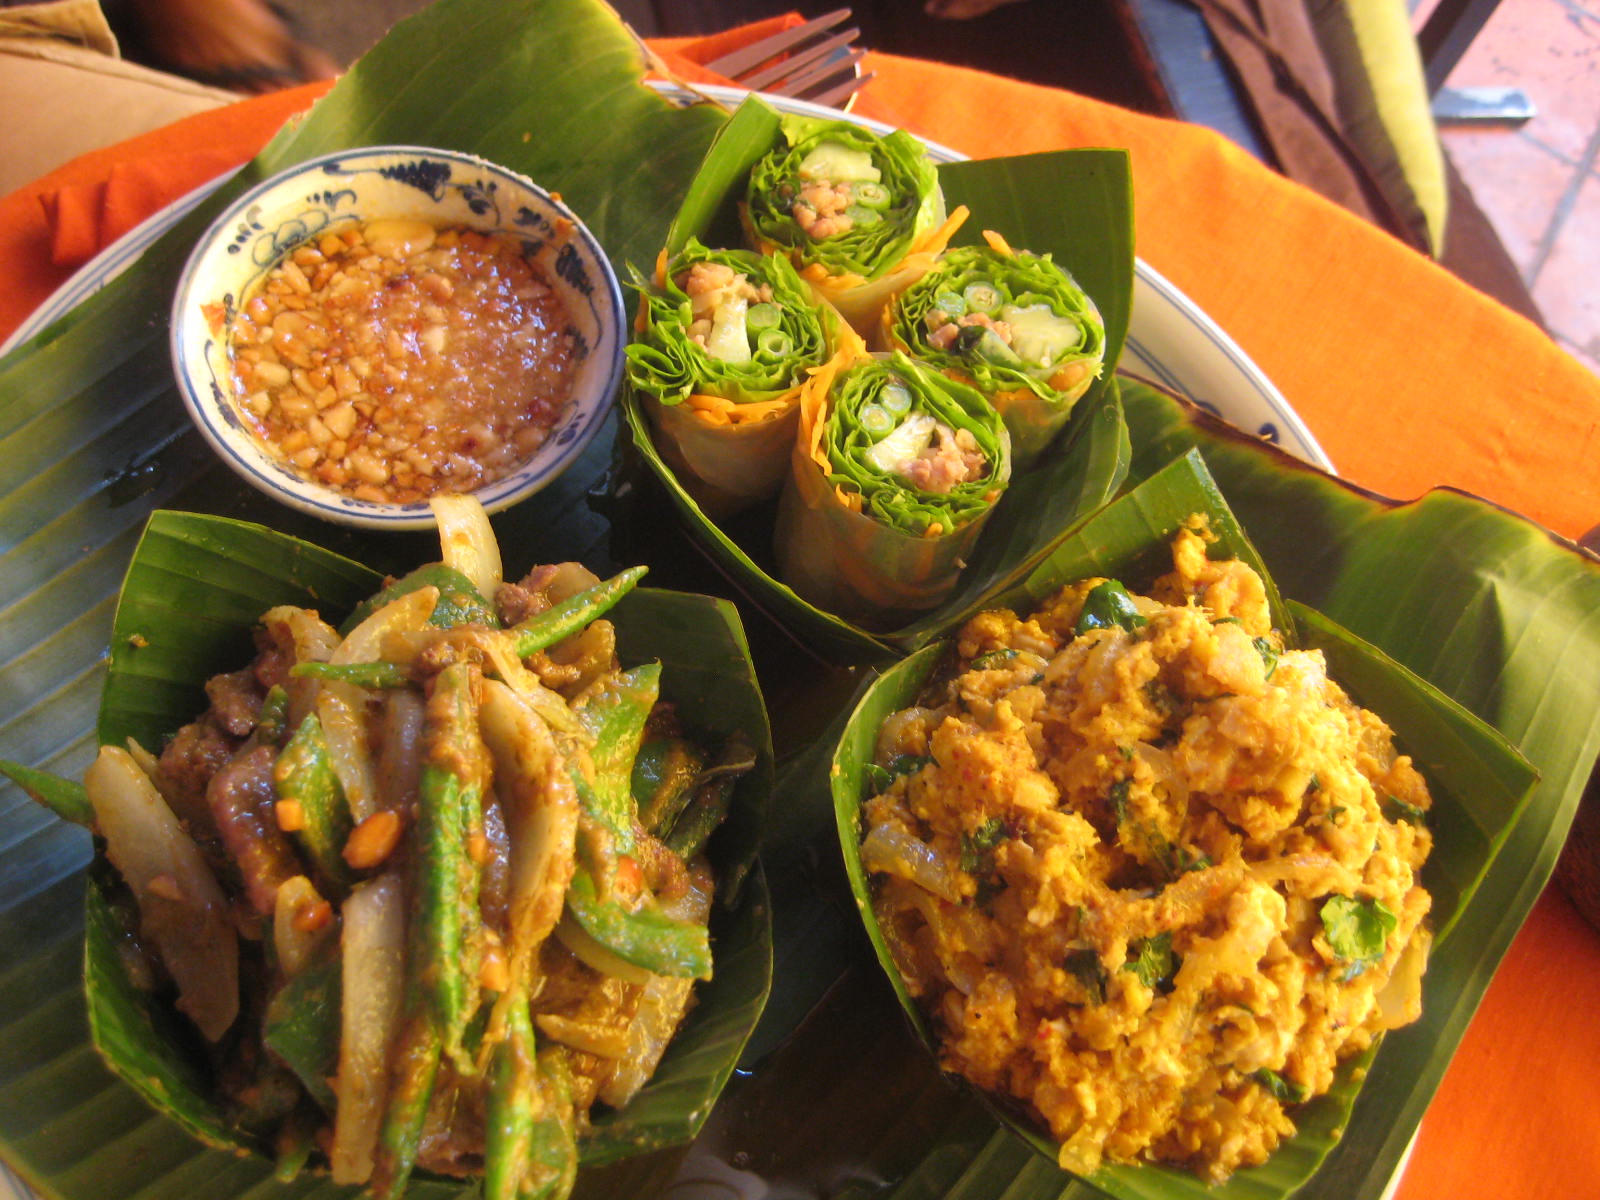 cambodia food culture, Cambodia culture